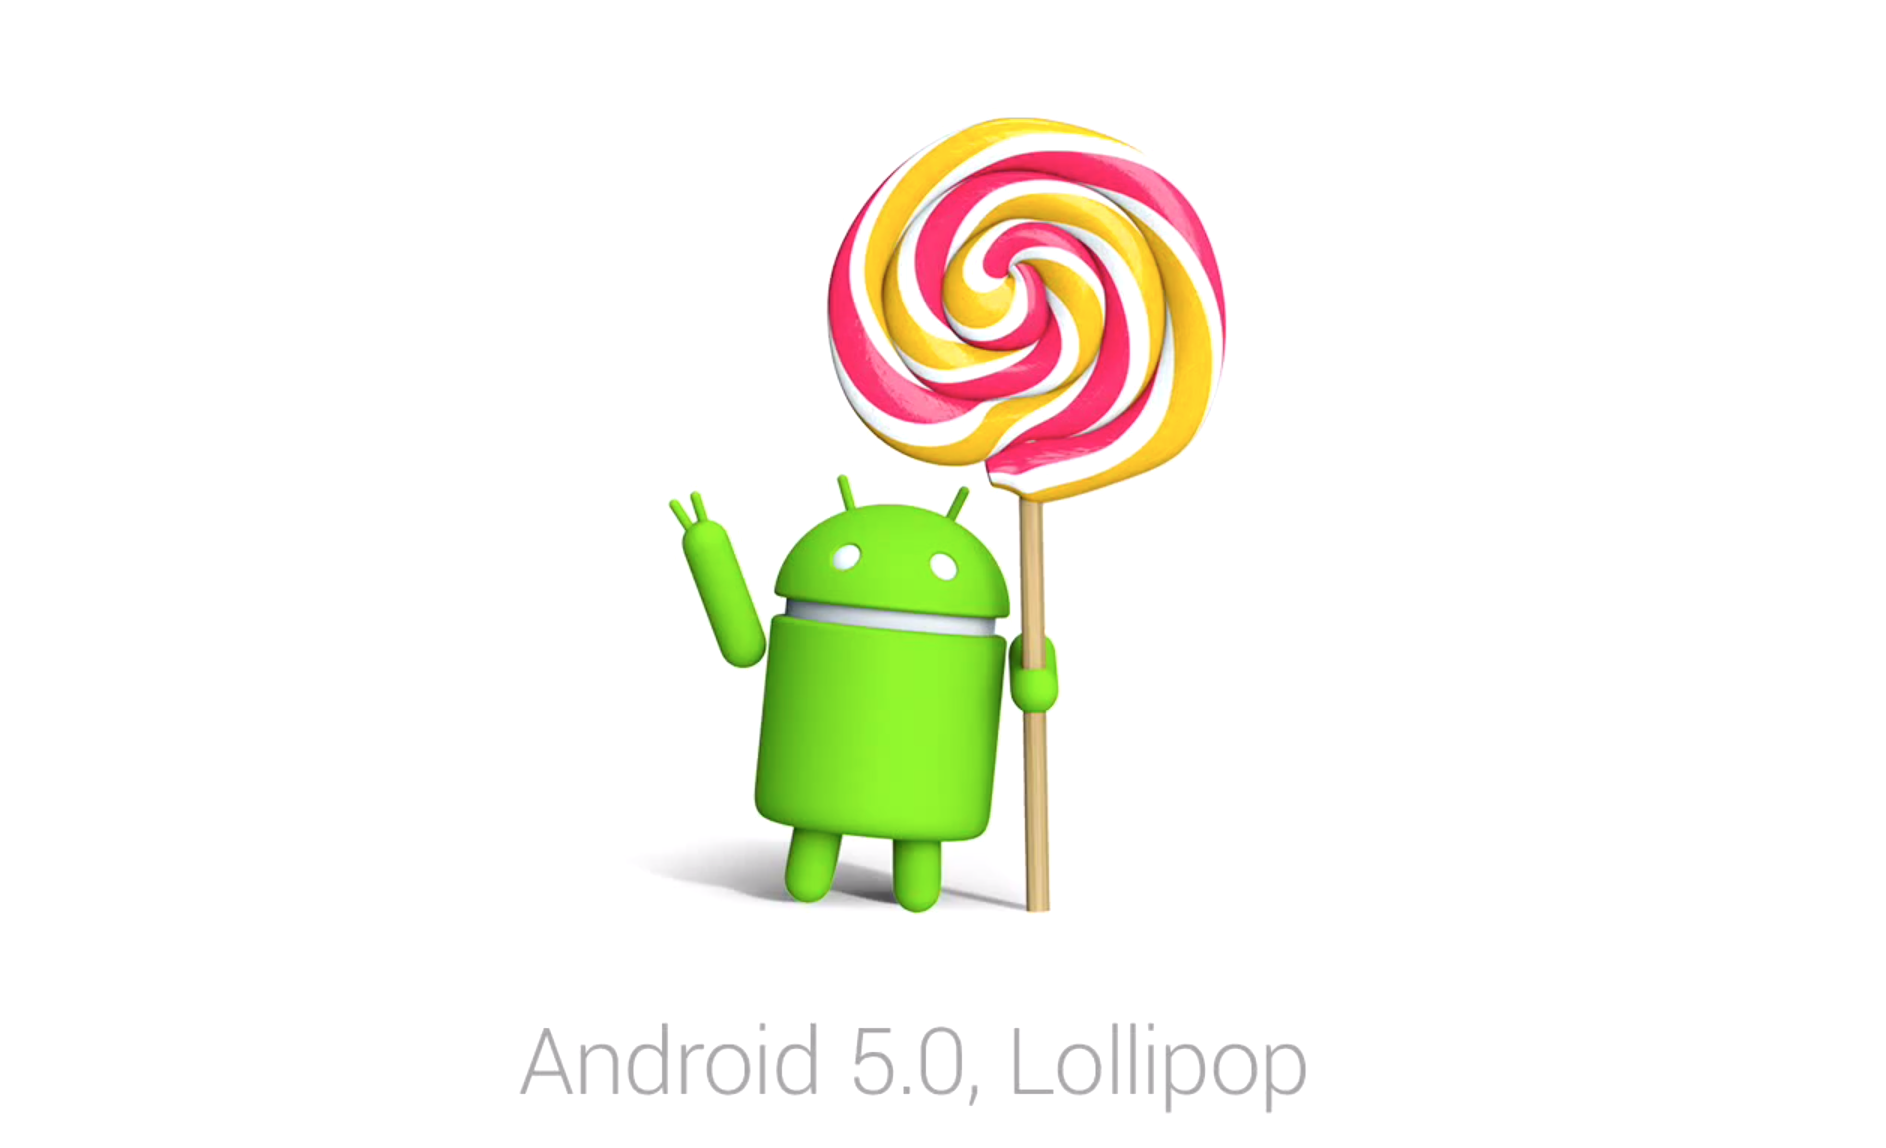 http://blog.gadgethelpline.com/wp-content/uploads/2014/10/Android-5.0-Lollipop-Bugdroid.png